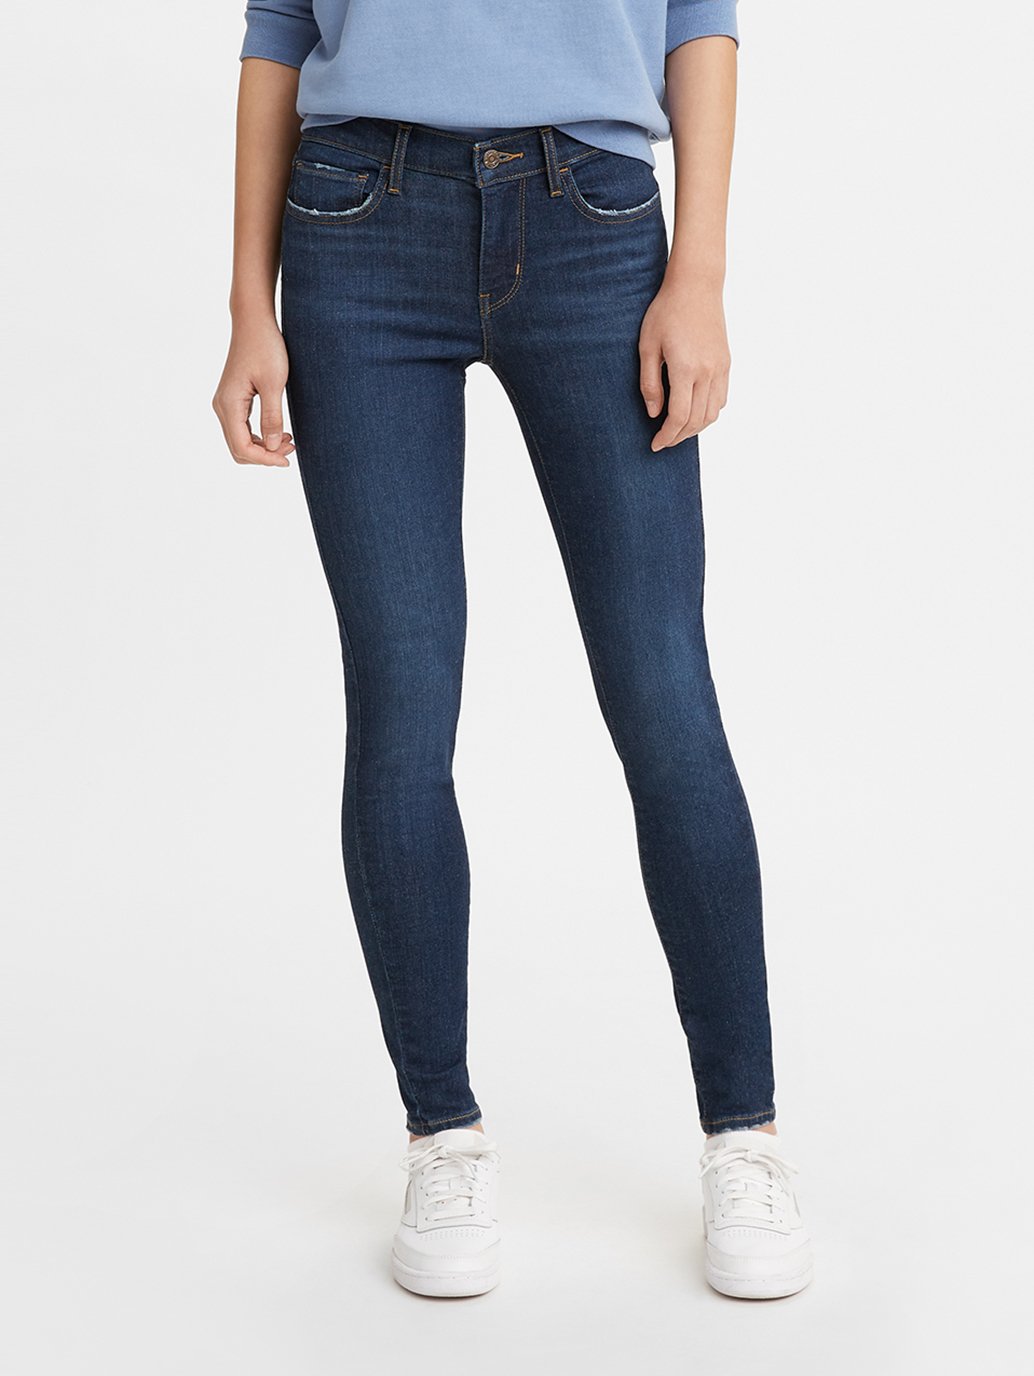 Skinny, Slim Fit, & High Waist Jeans for Women